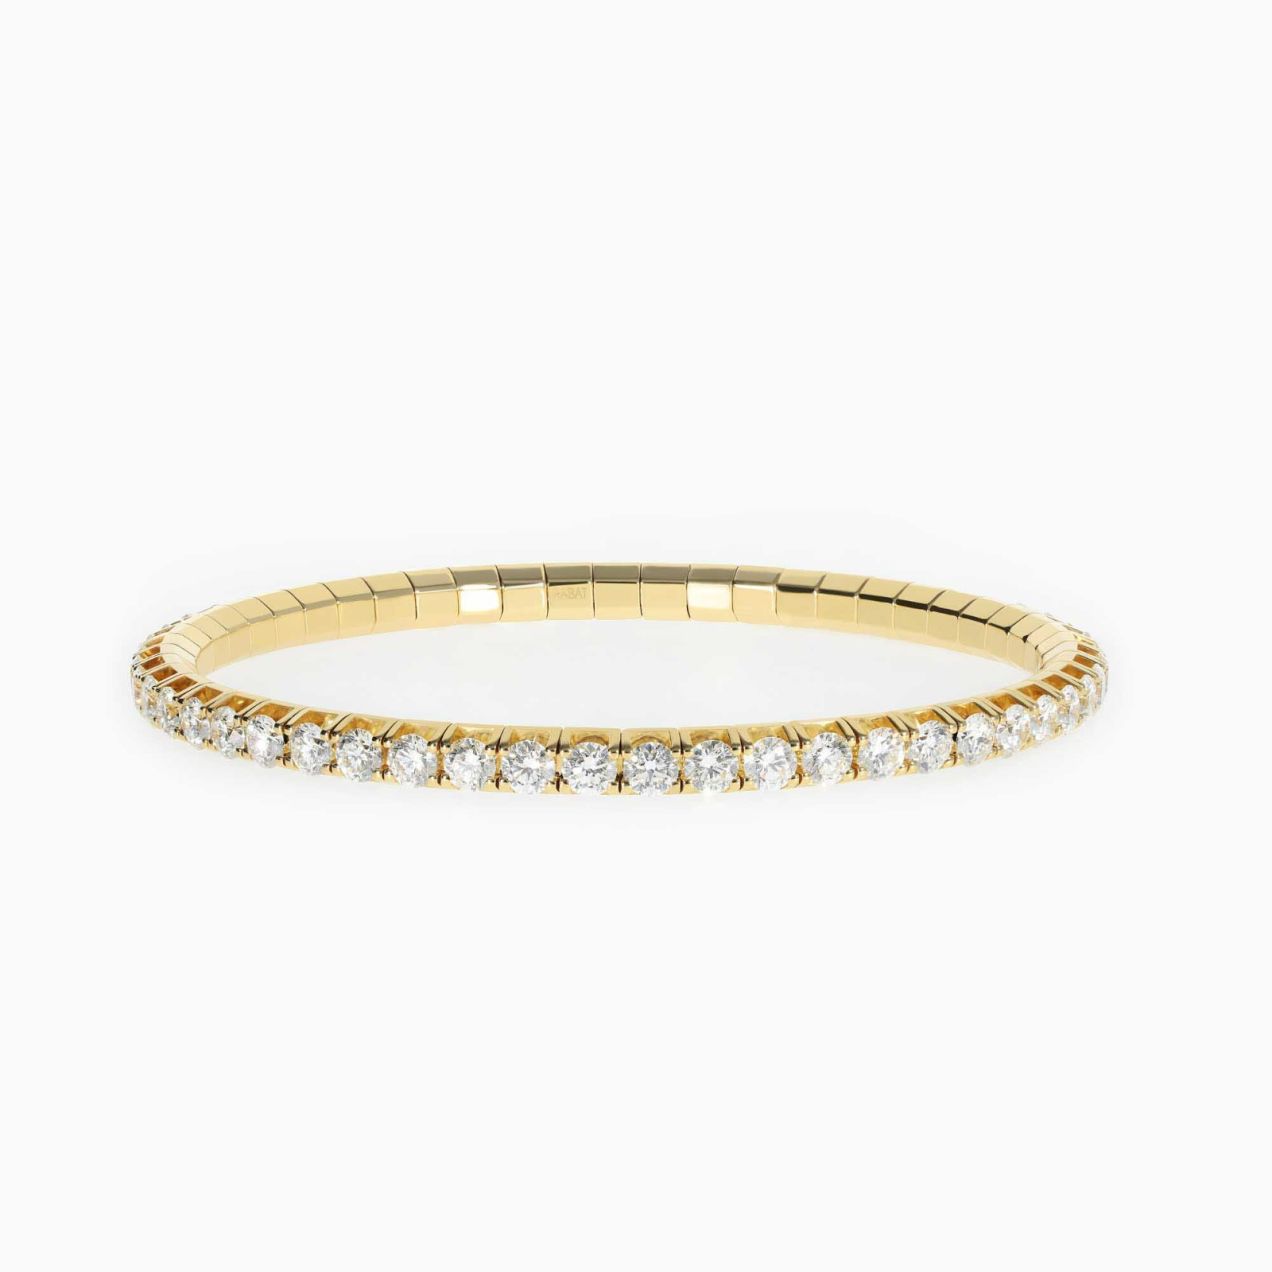 Yellow gold riviere bracelet with brilliant cut white diamonds